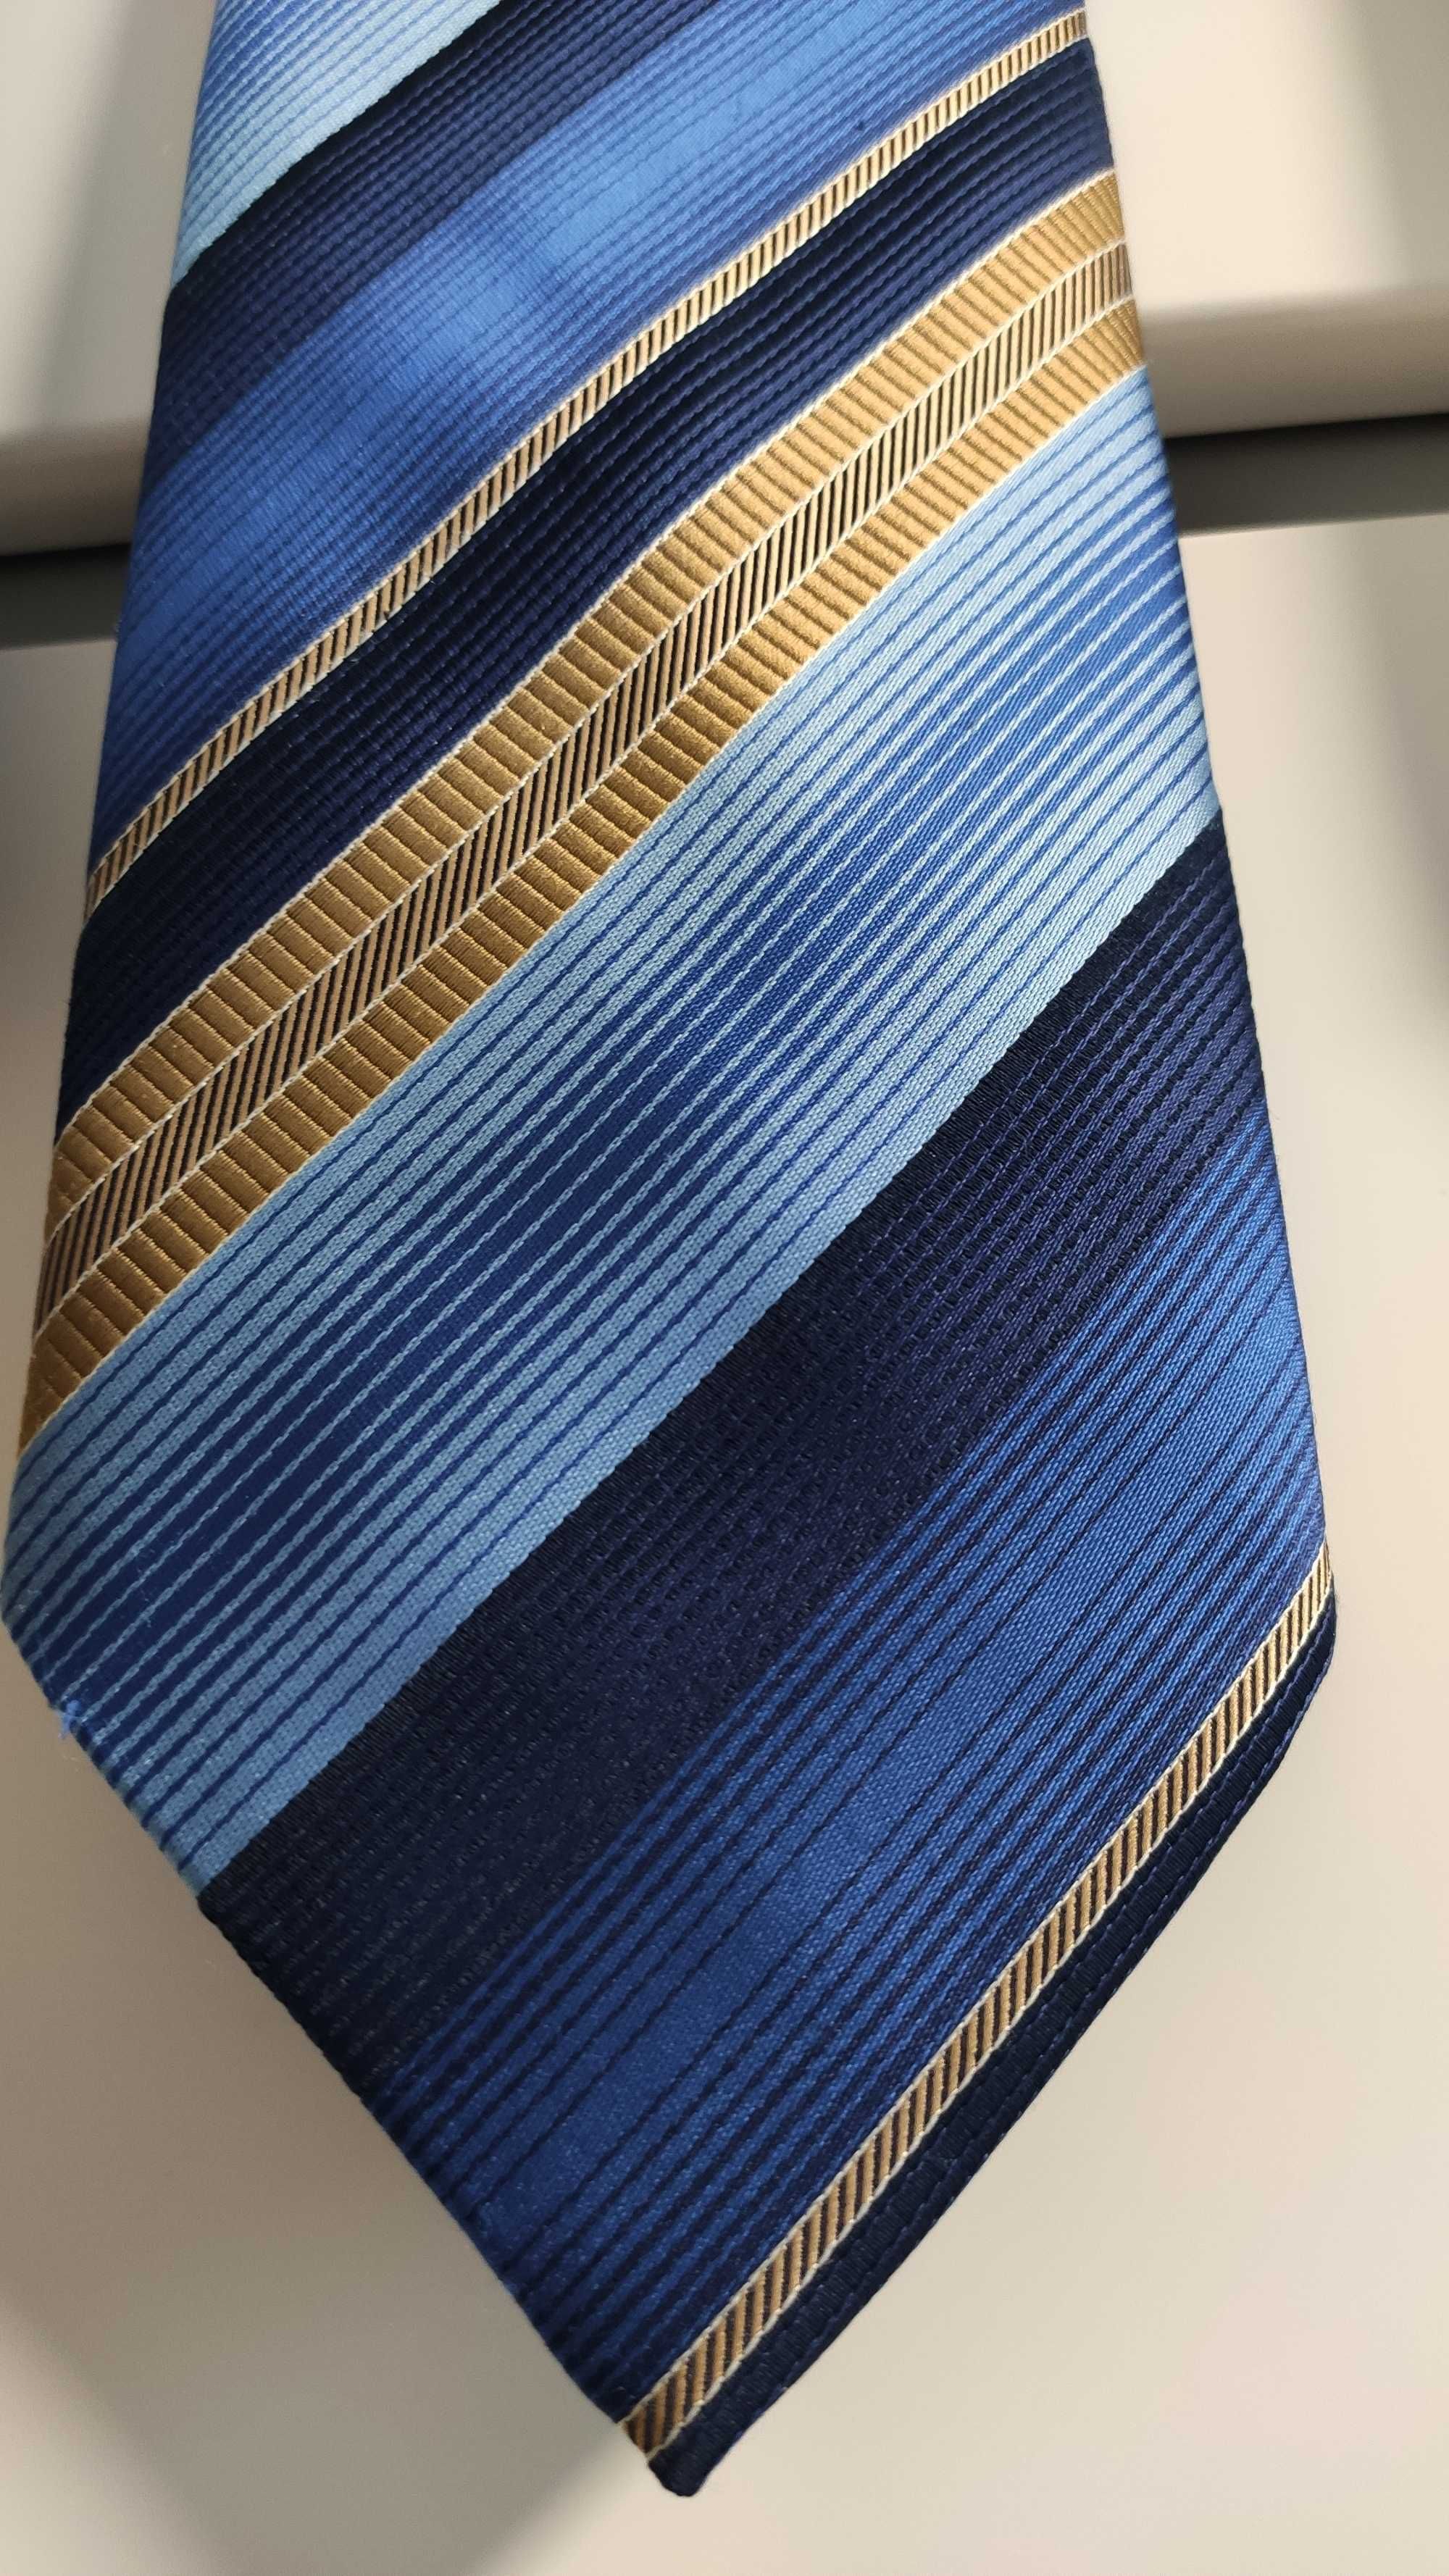 krawat kolorowy, jak nowy.